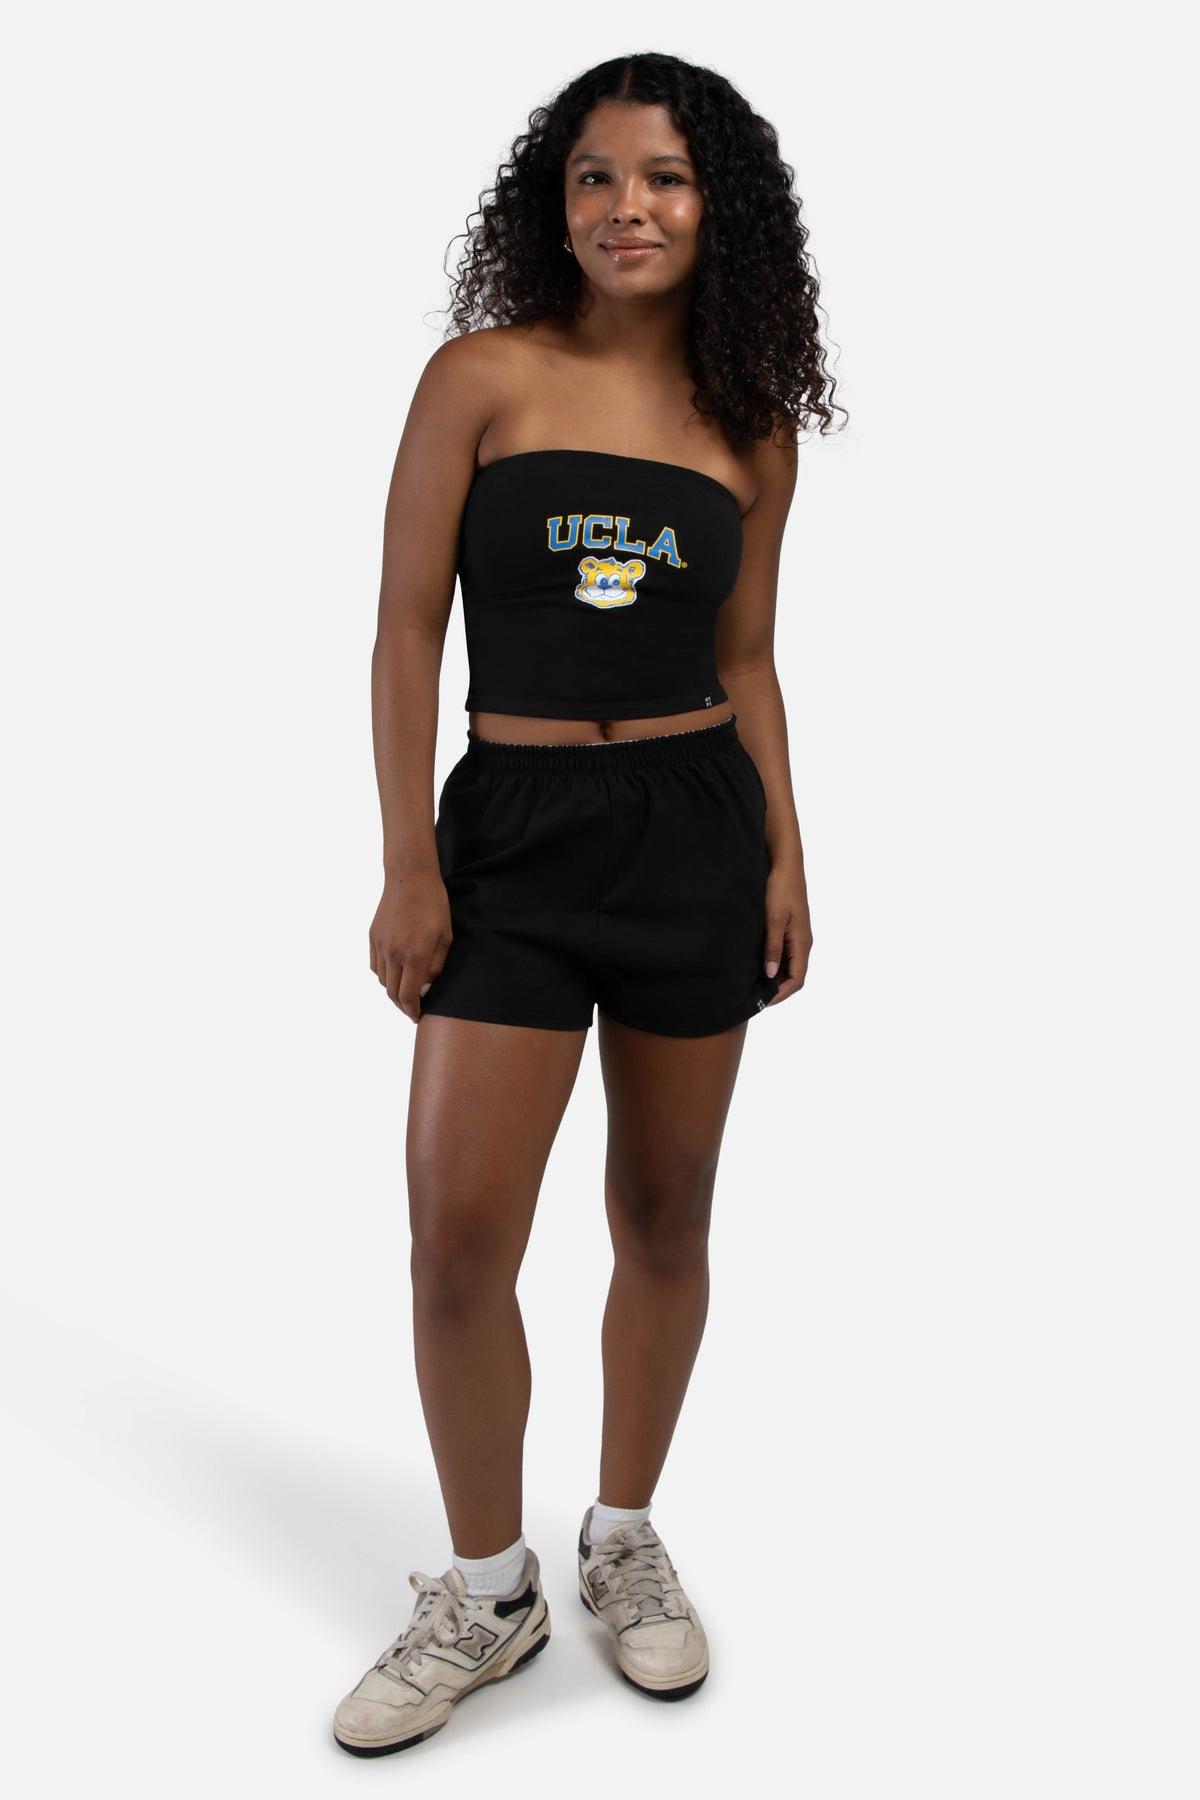 UCLA P.E. Shorts